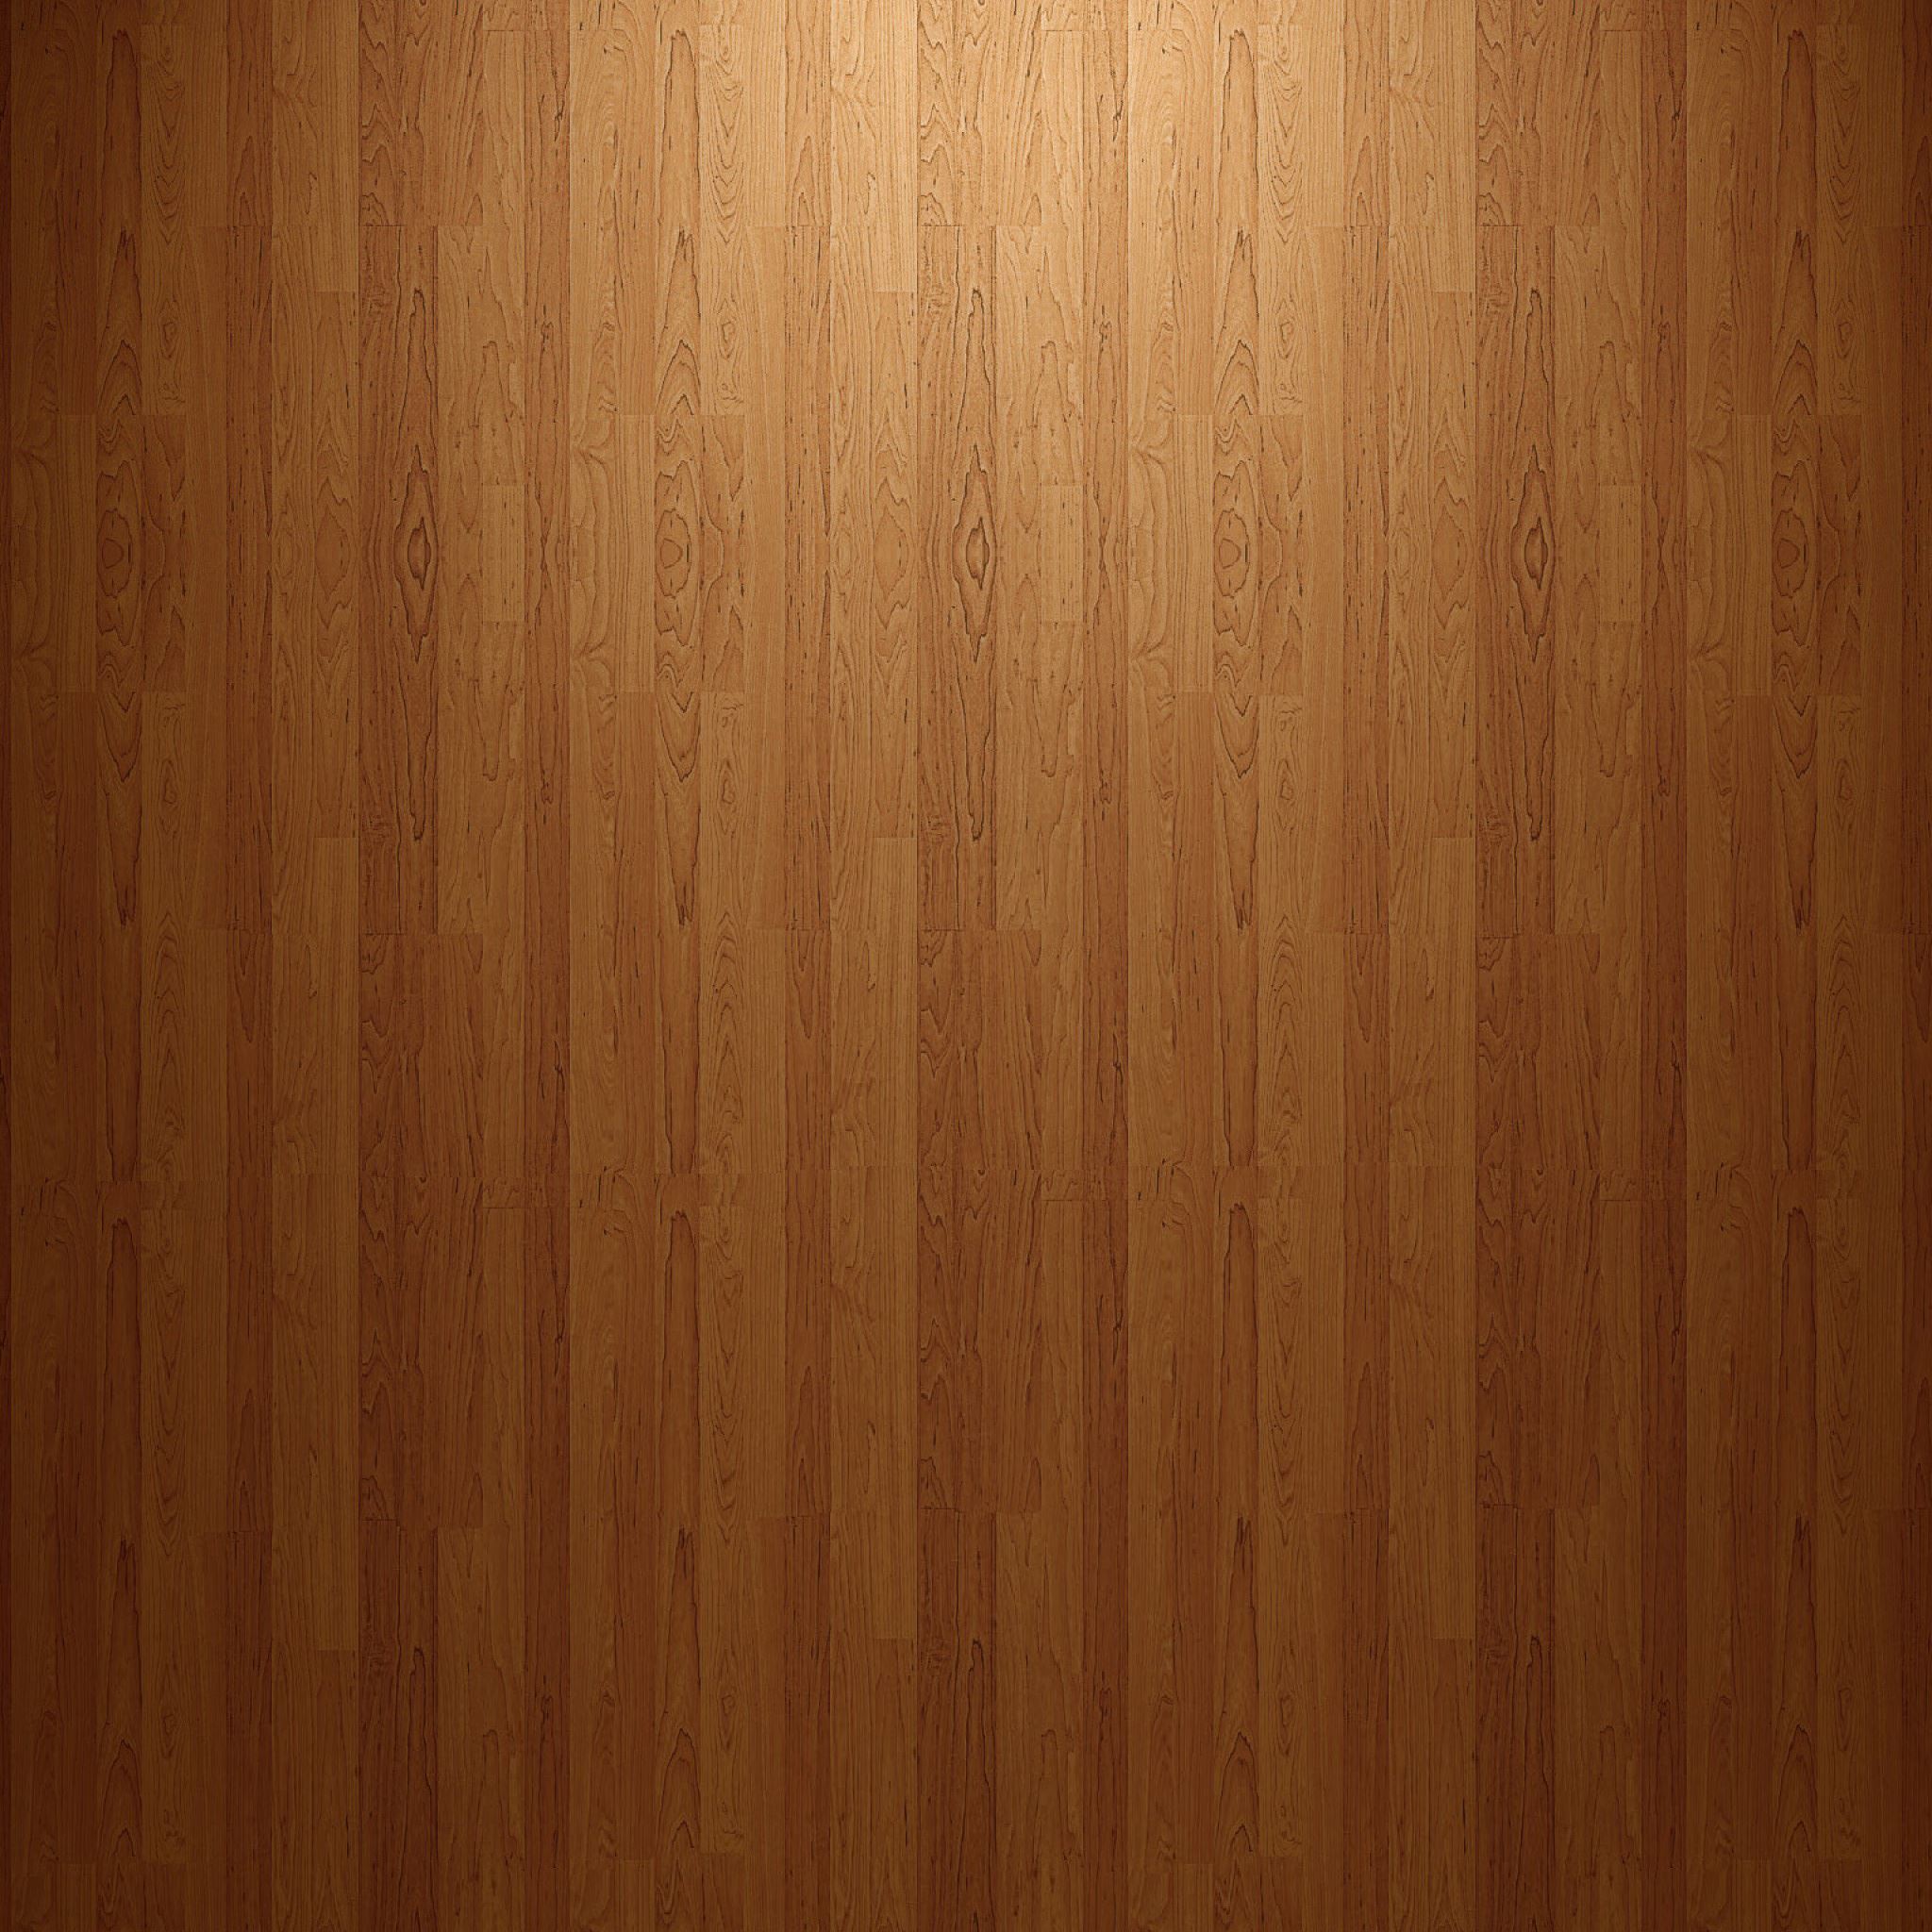 Wood Panel iPad Air wallpaper 